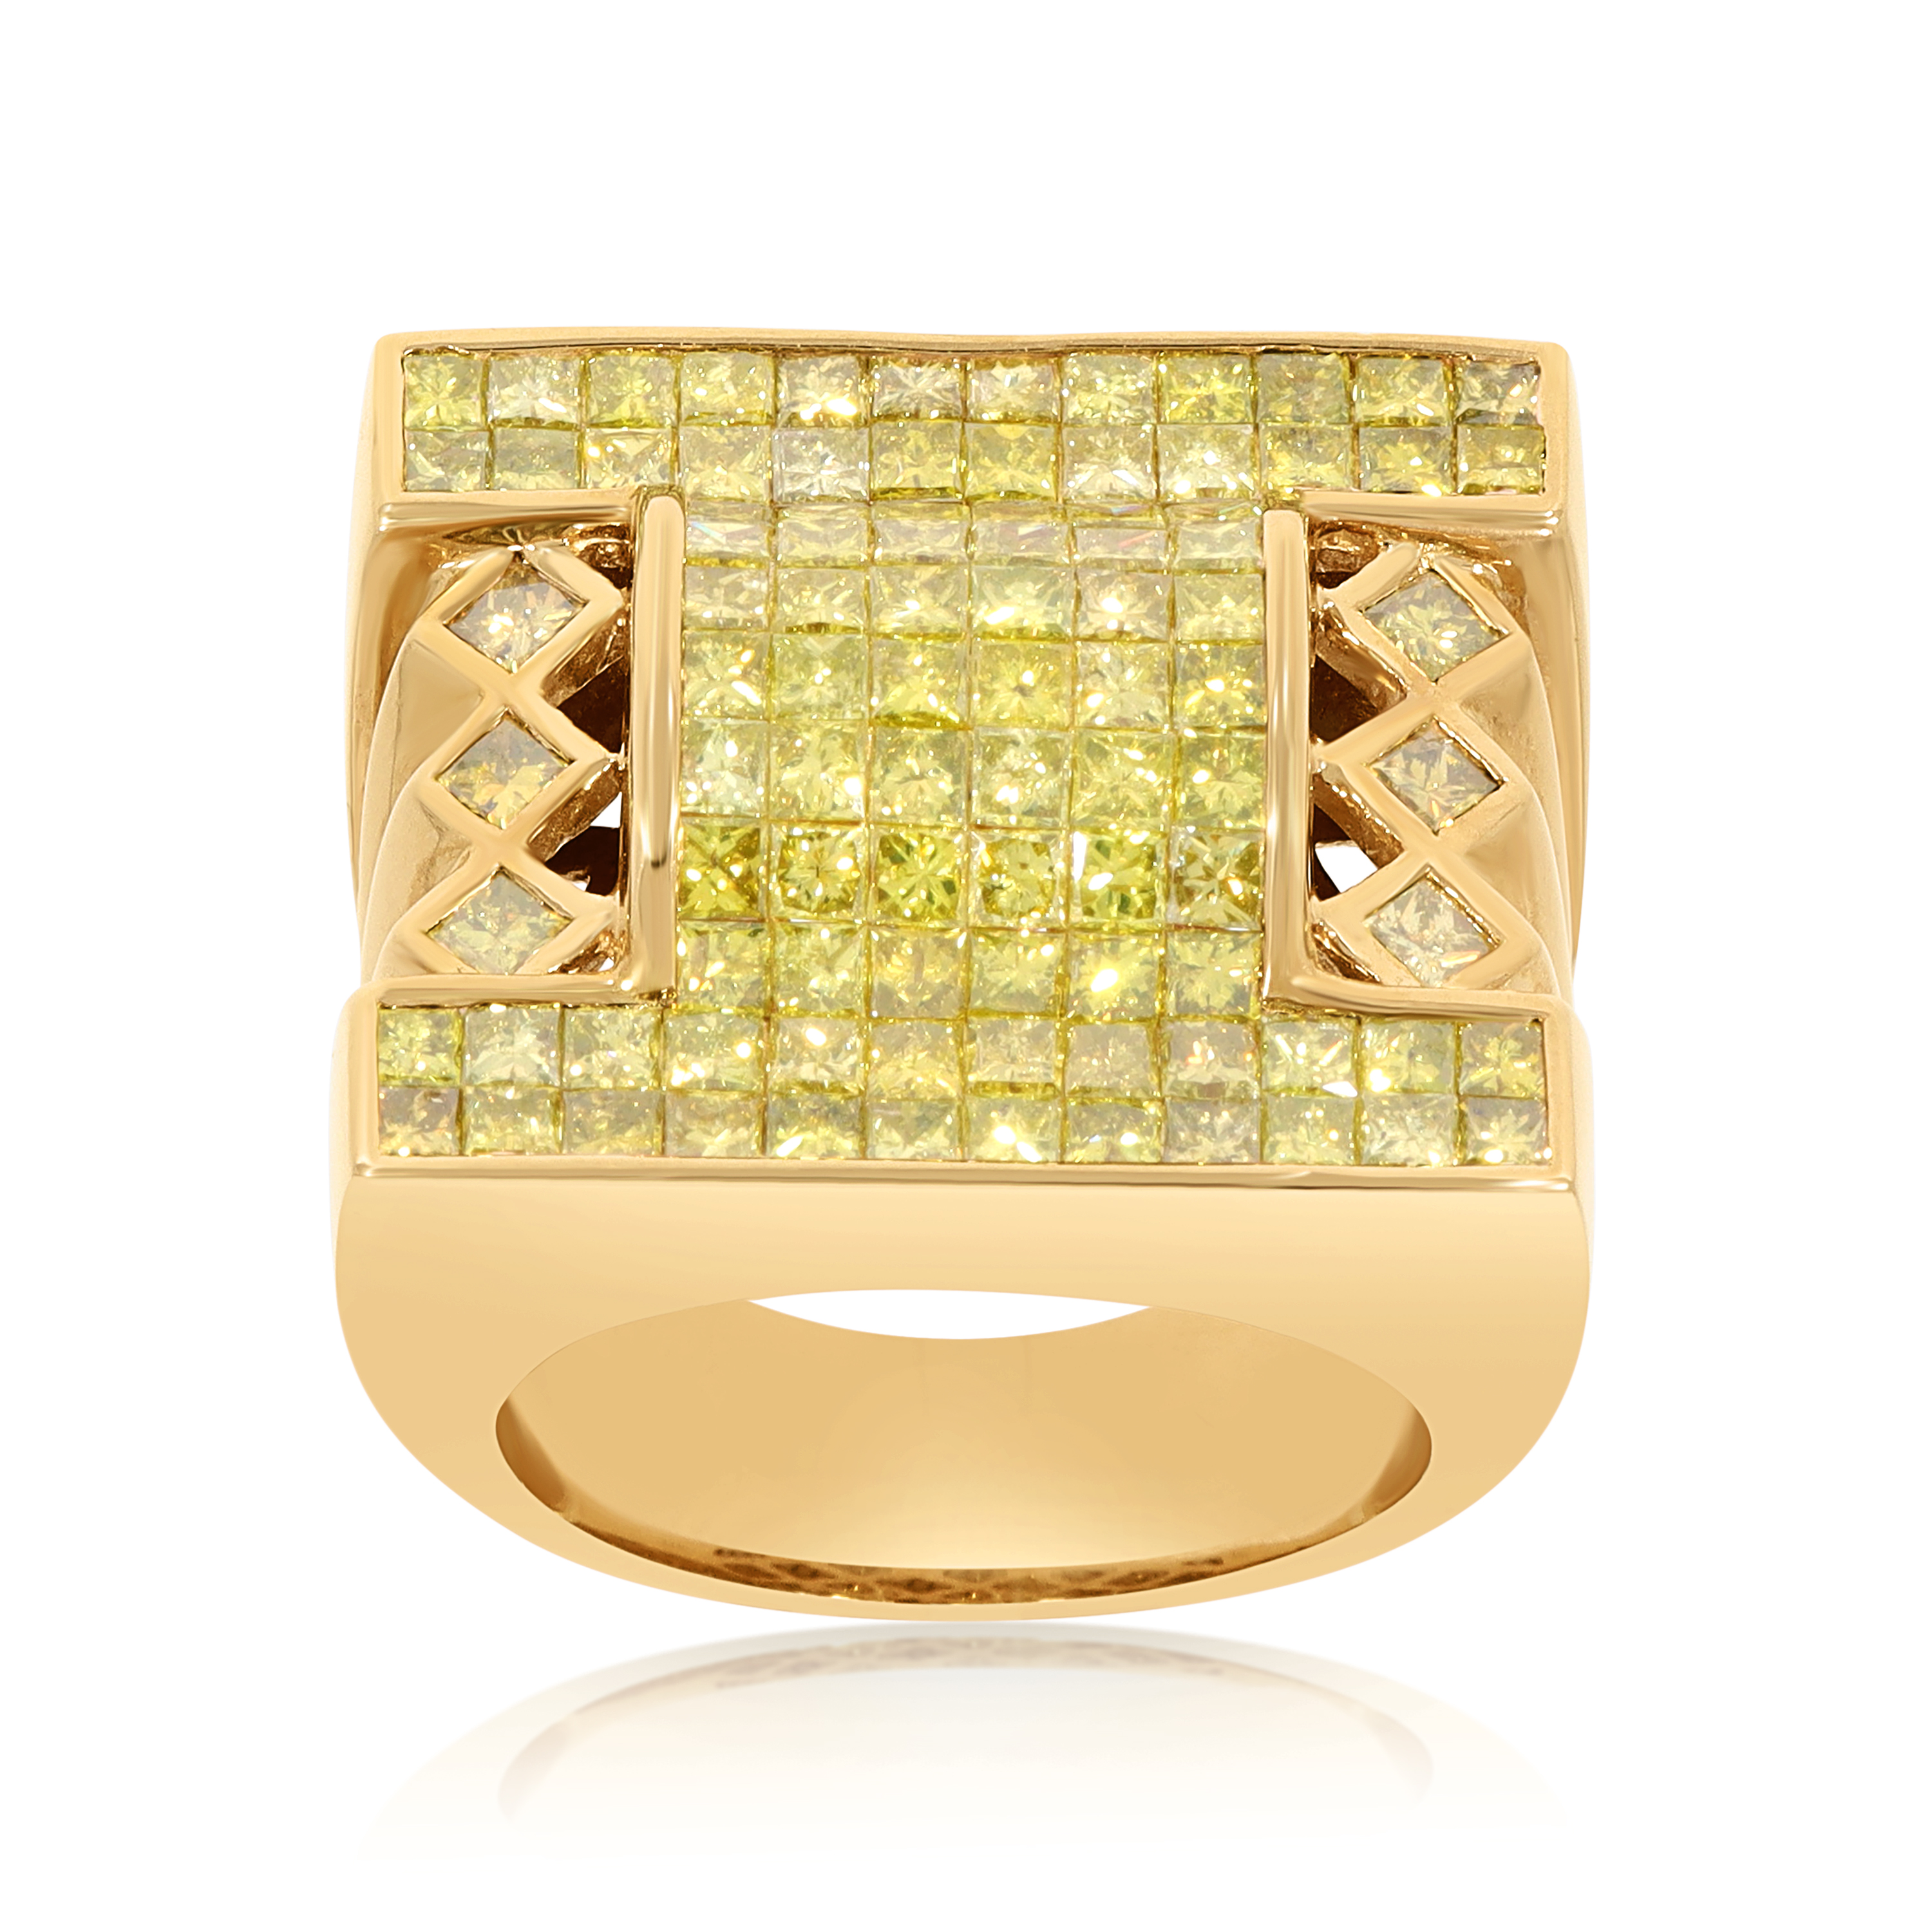 Princess Cut Canary Diamond Ring 5.65 ct. 14K Yellow Gold